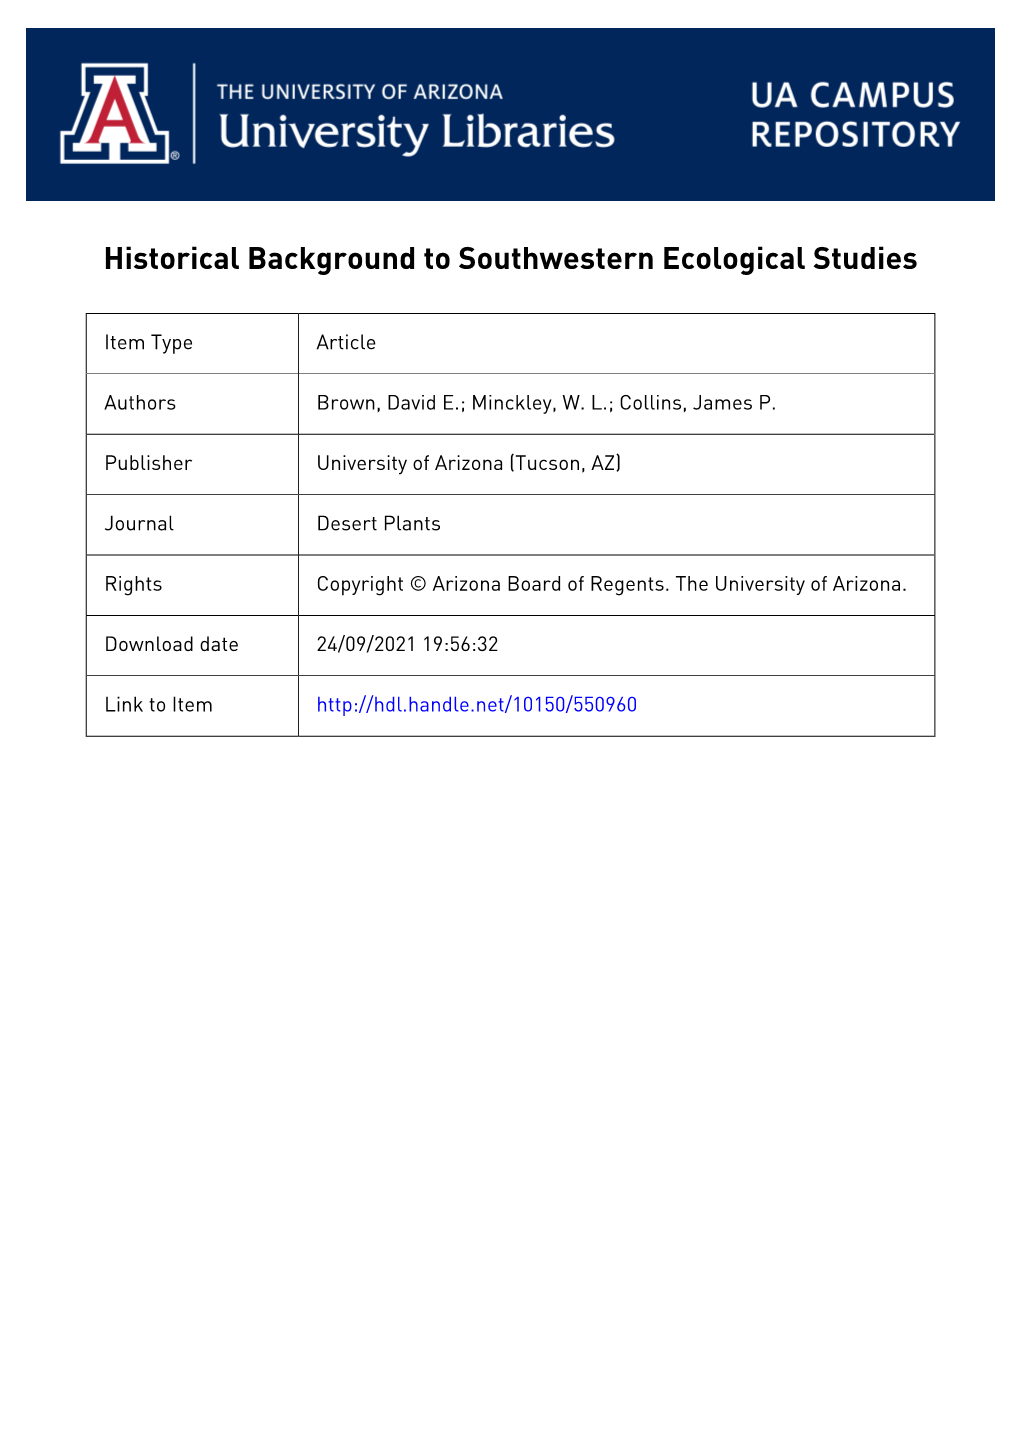 Background Ecological Studies